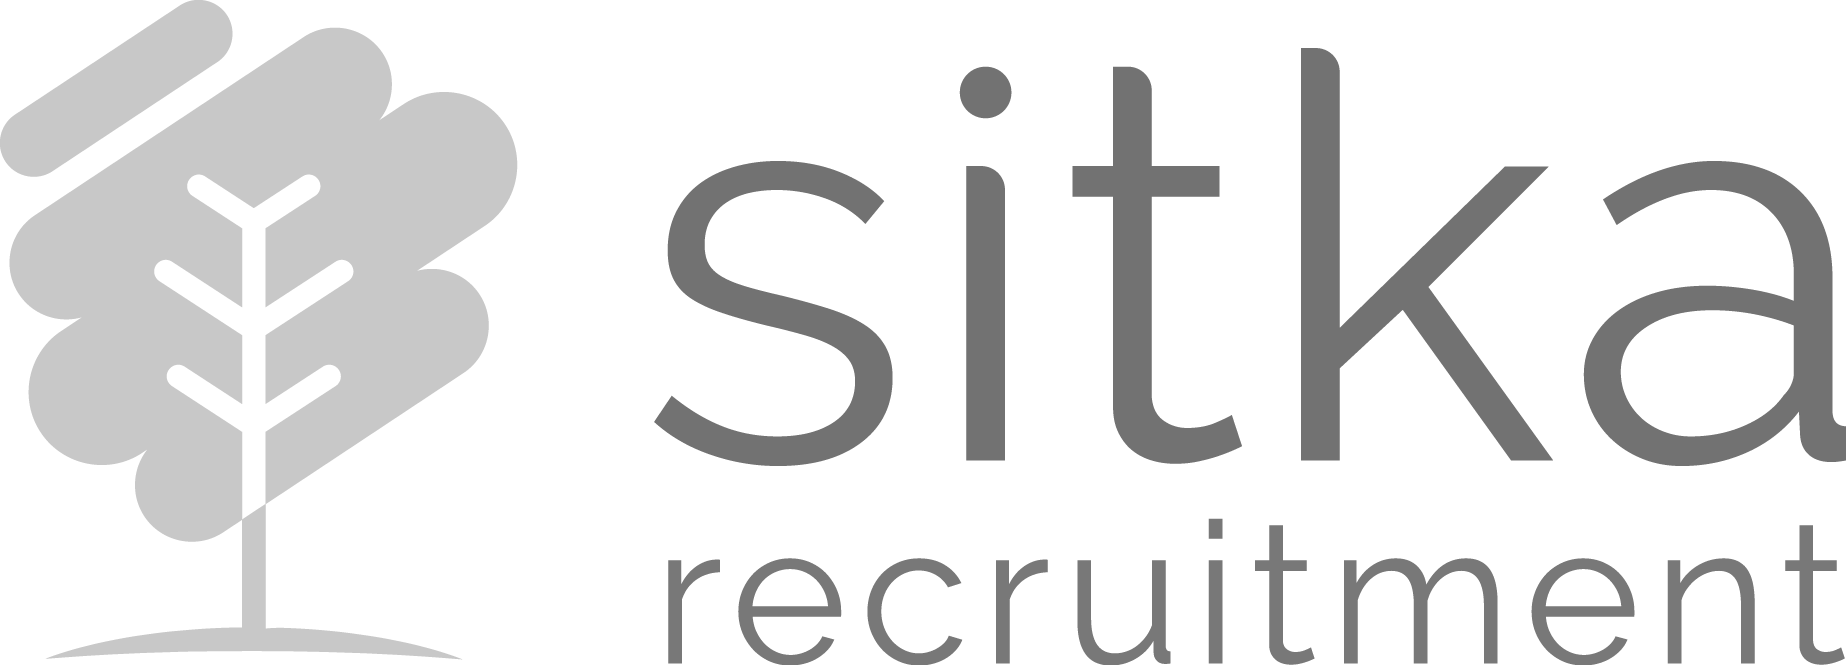 sitka recruitment logo